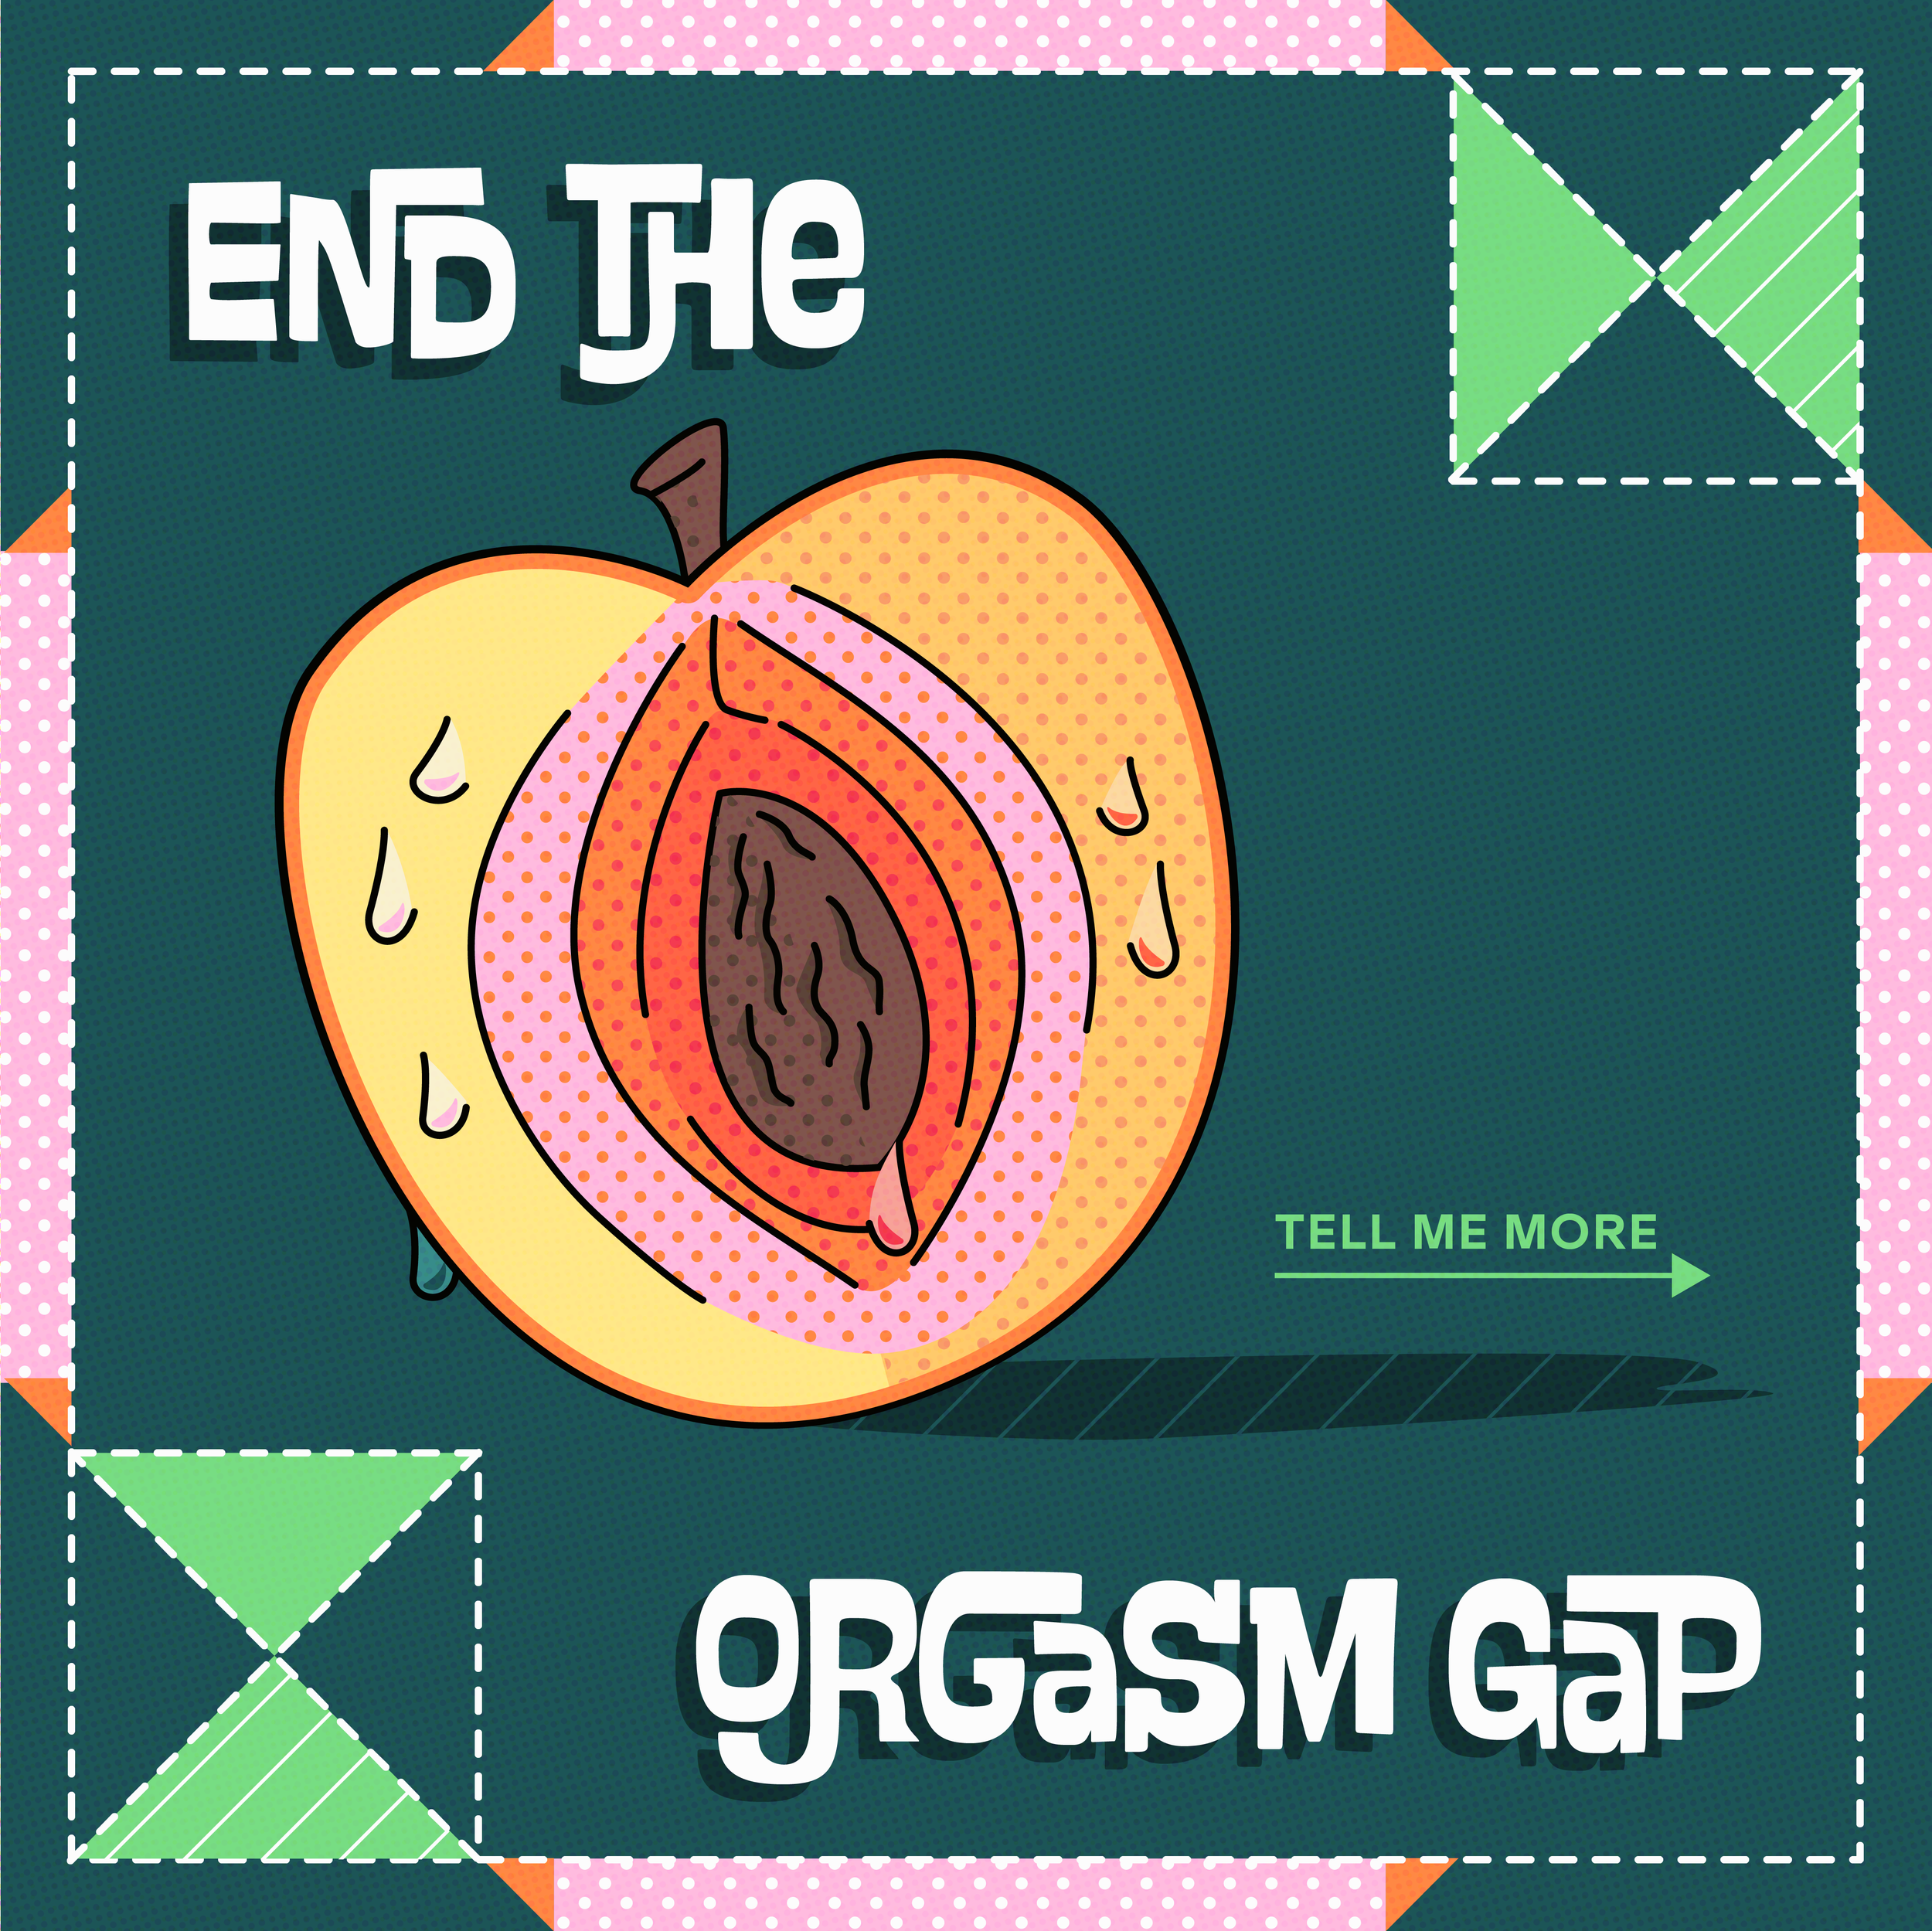 10948_OrgSoc Aug2022 Assets Education Carousel B (Orgasm Gap)_Tile2_Halftone_ak_v3_Tile1.png